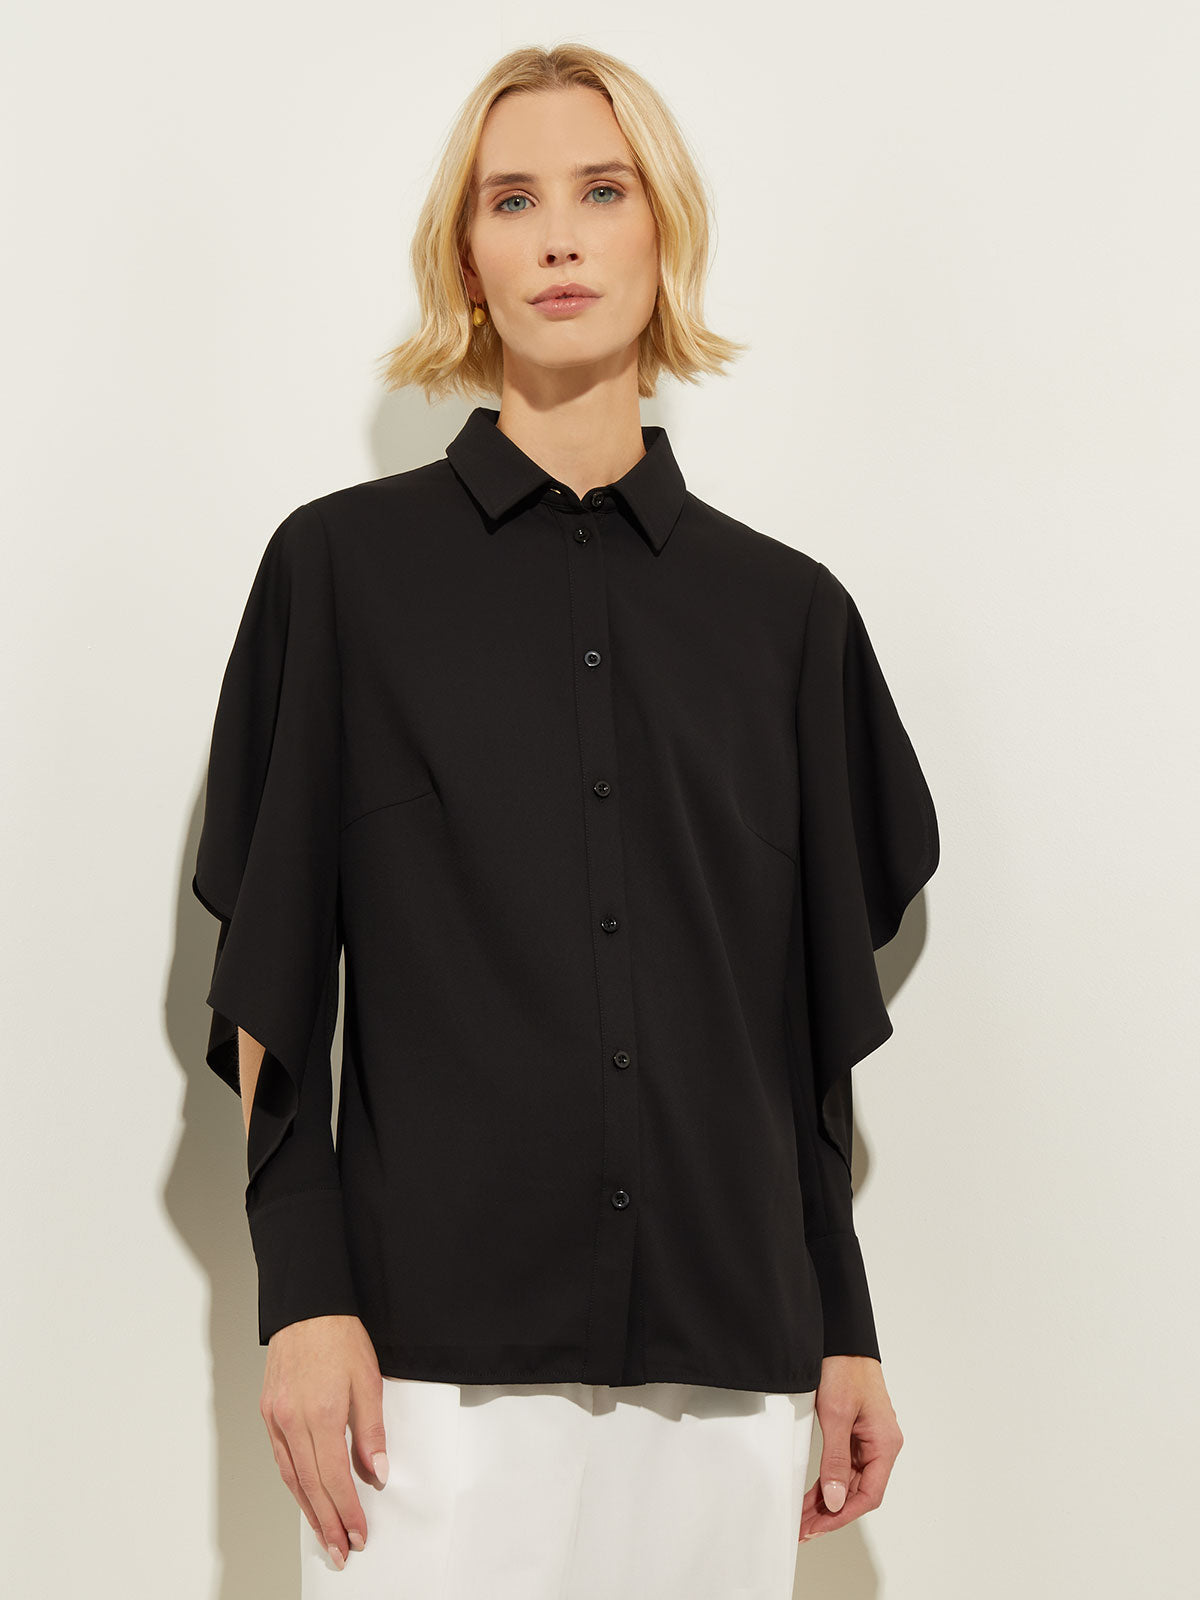 Short Sleeve Black Shirt Ruffle Bottom Tunic